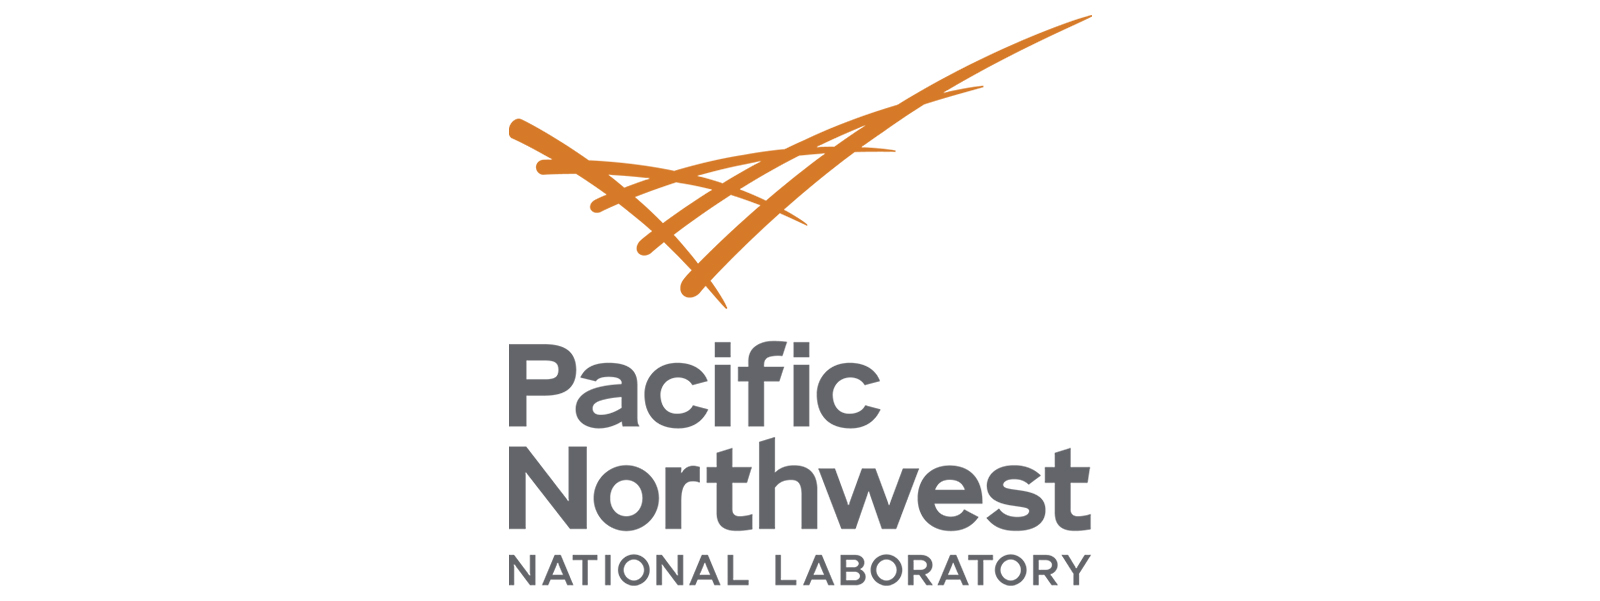 logos-Pacific Northwest National Laboratory